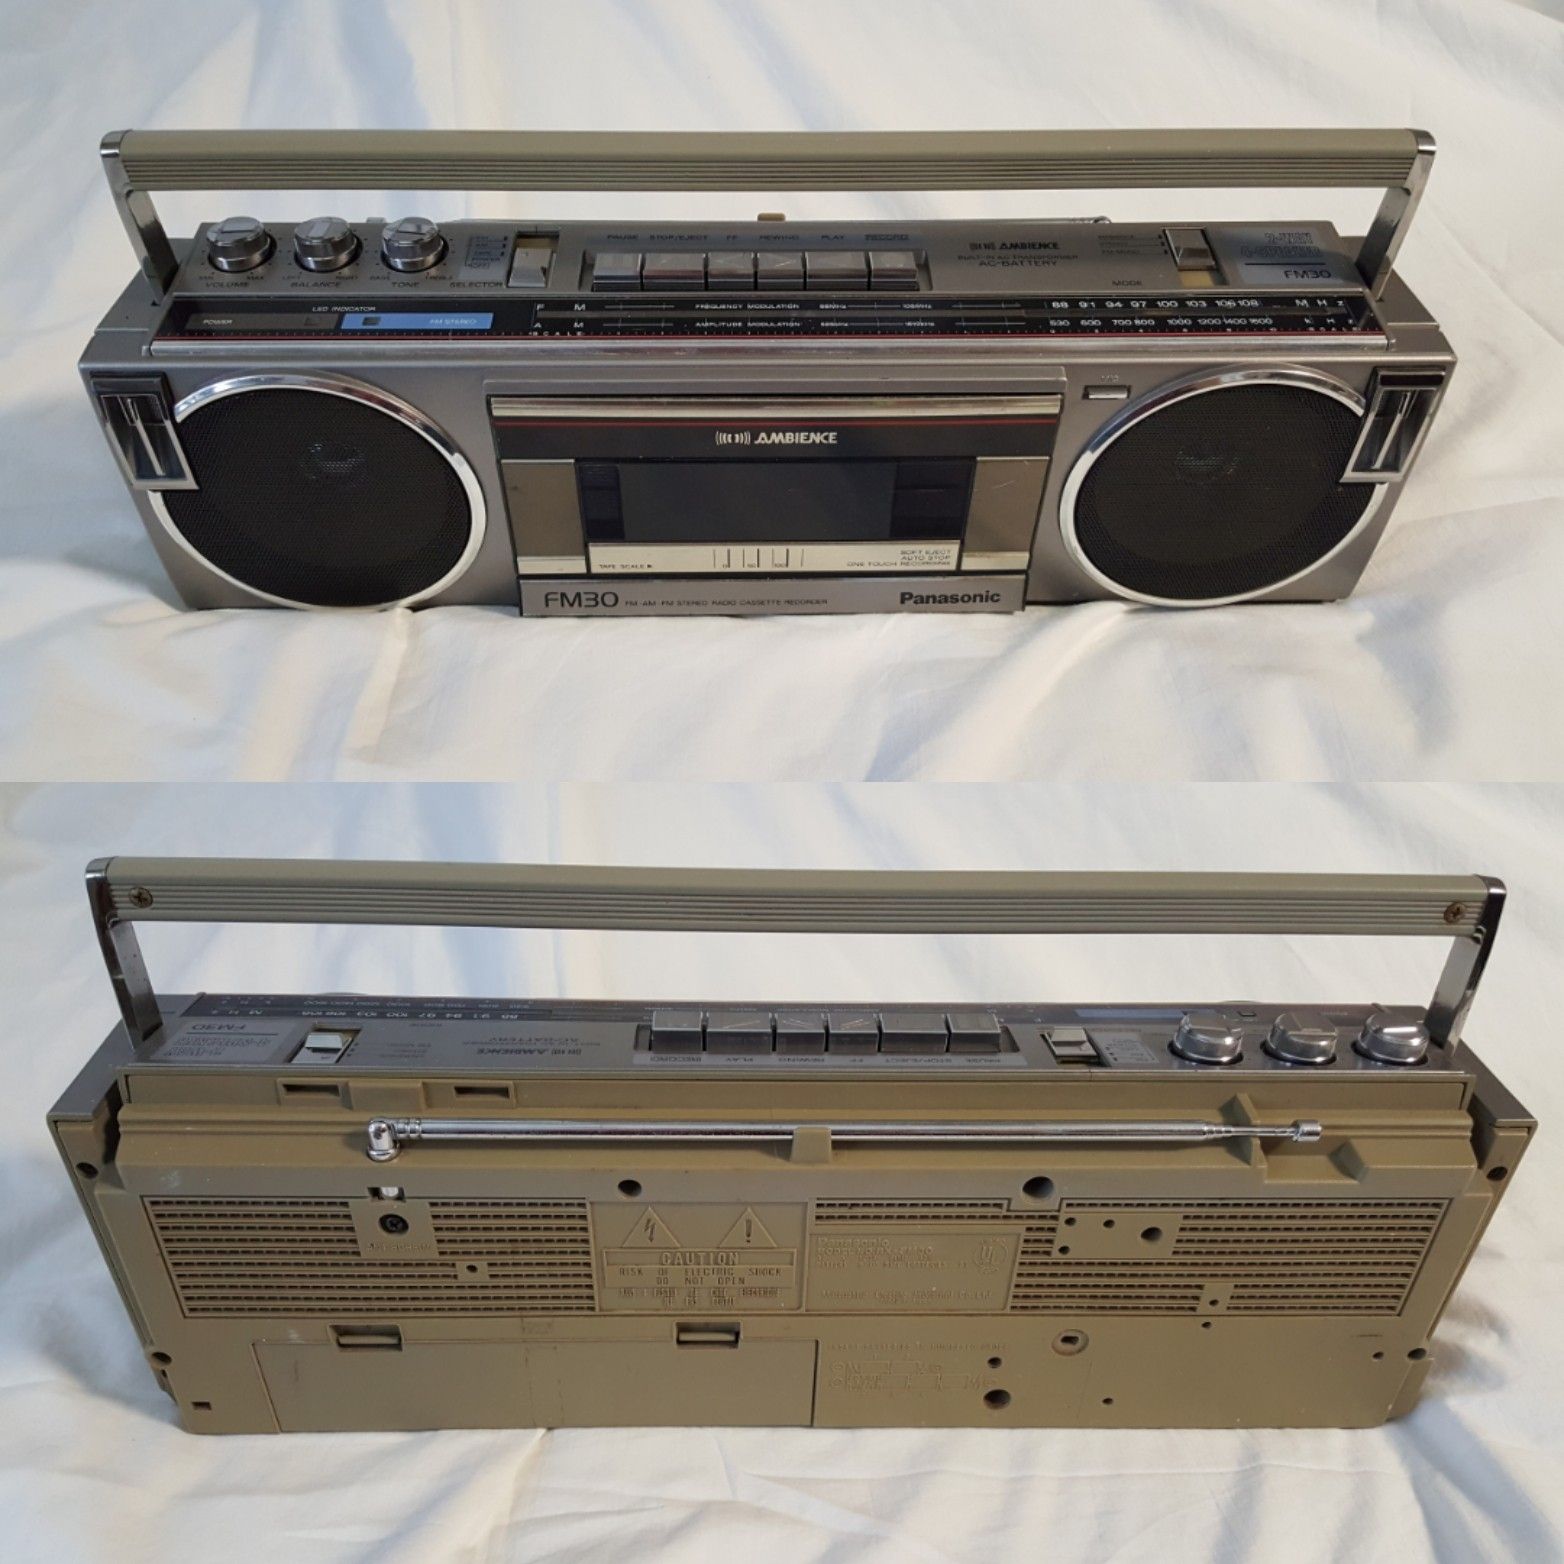 Panasonic fm30 radio with cassette player